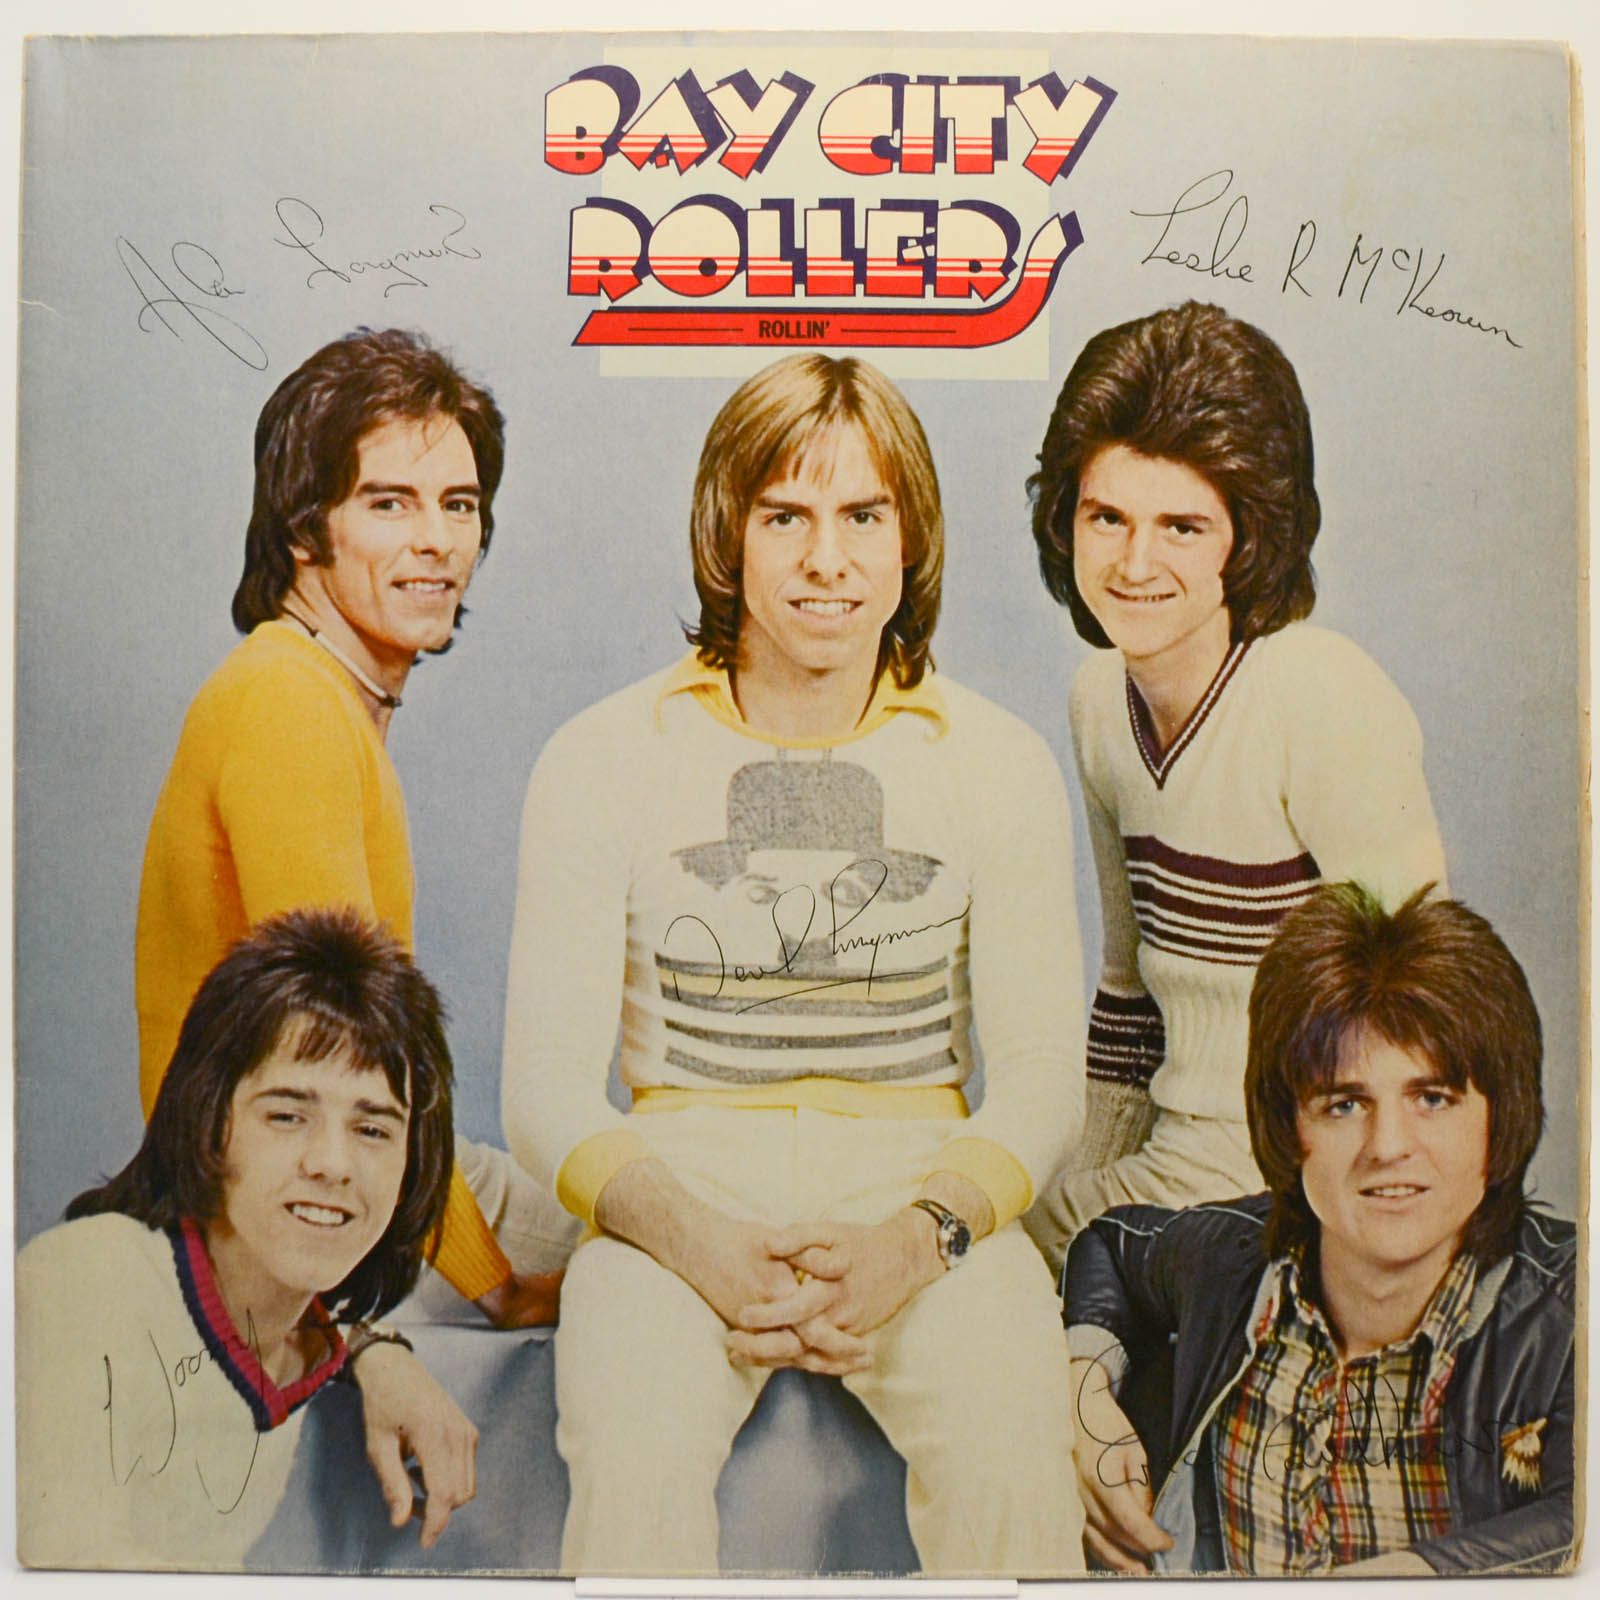 Bay City Rollers — Rollin', 1974